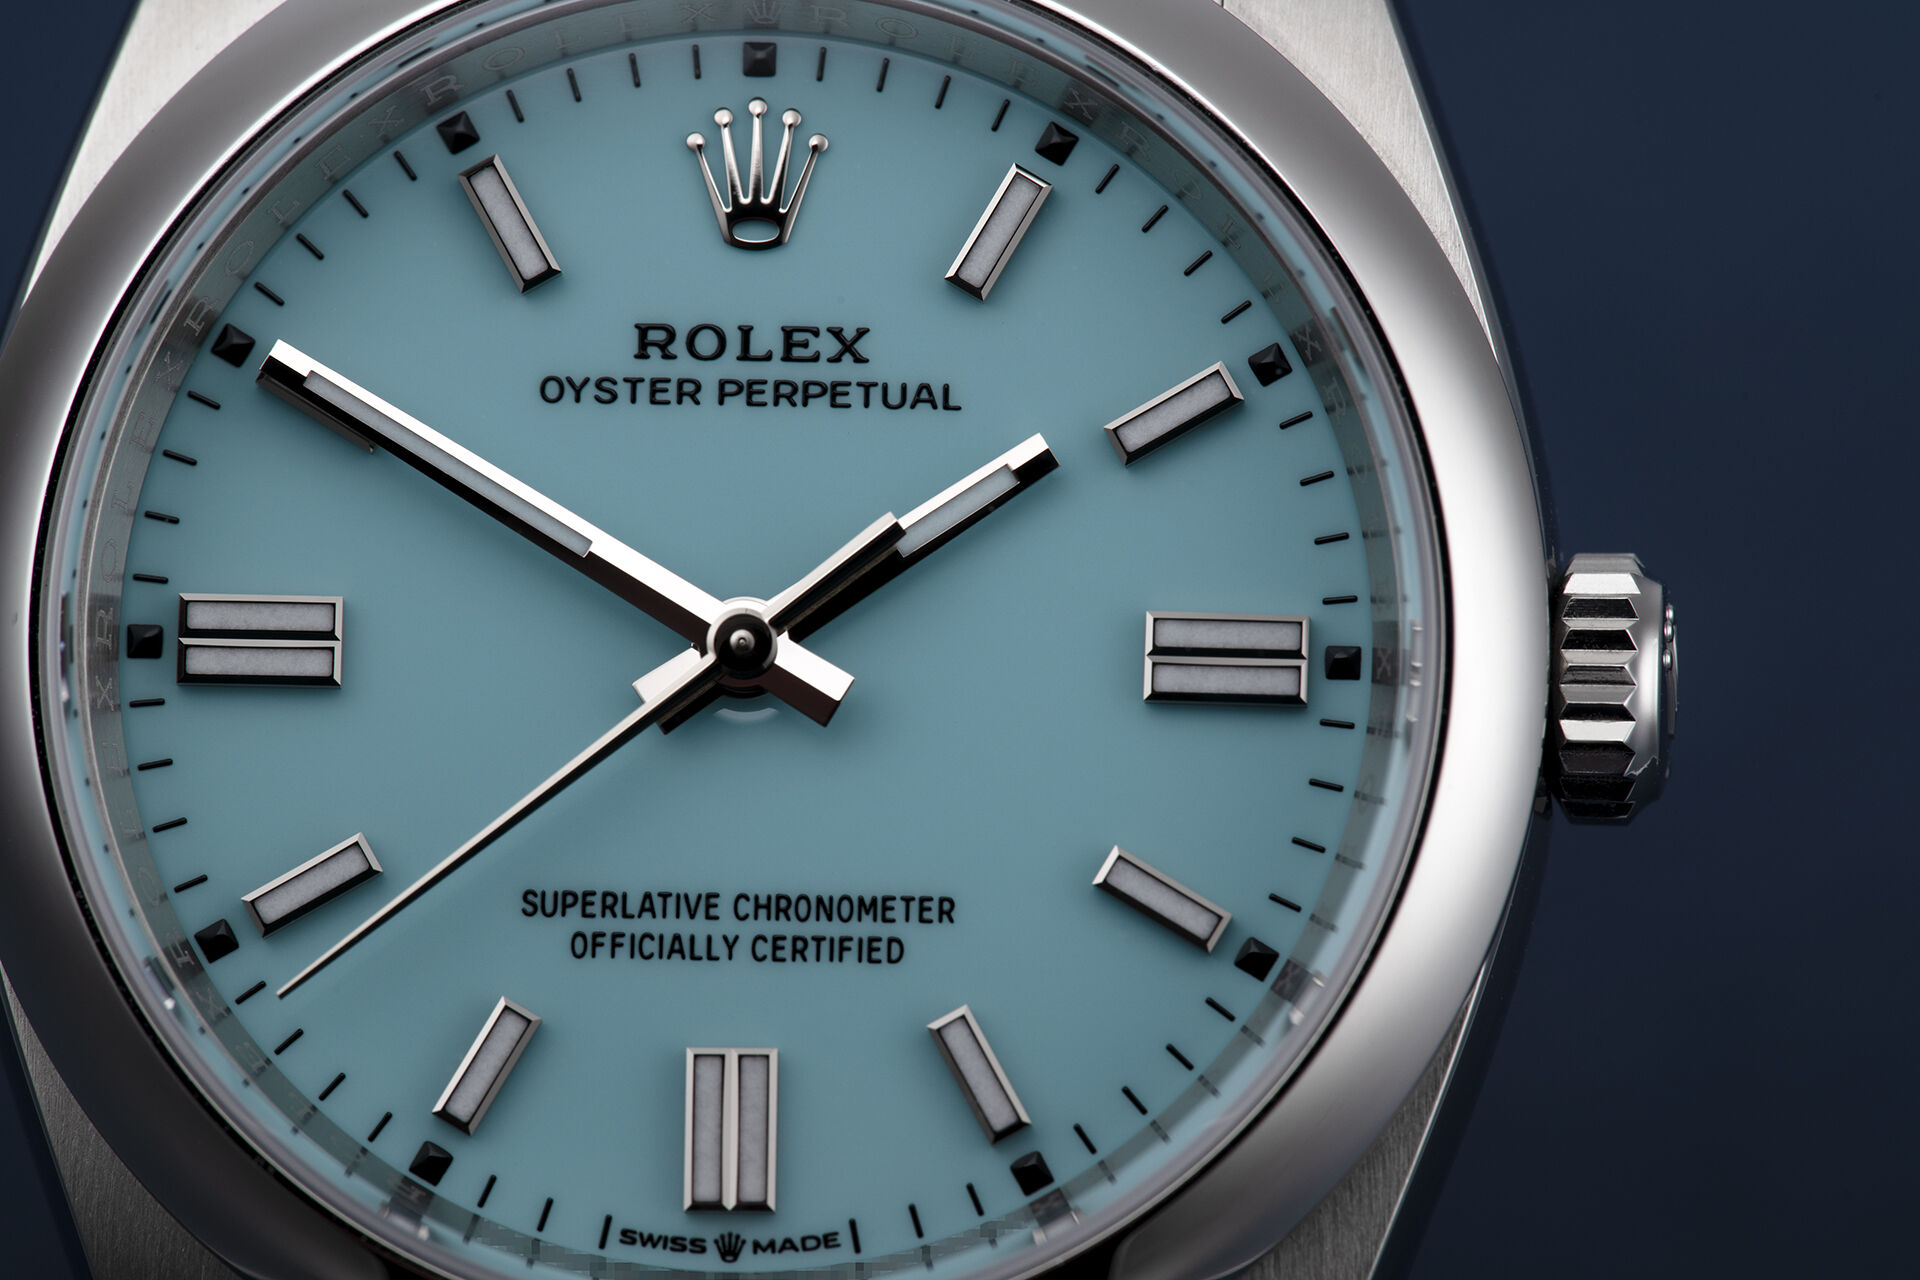 ref 126000 | Brand New 5 Year Rolex Warranty | Rolex Oyster Perpetual 36